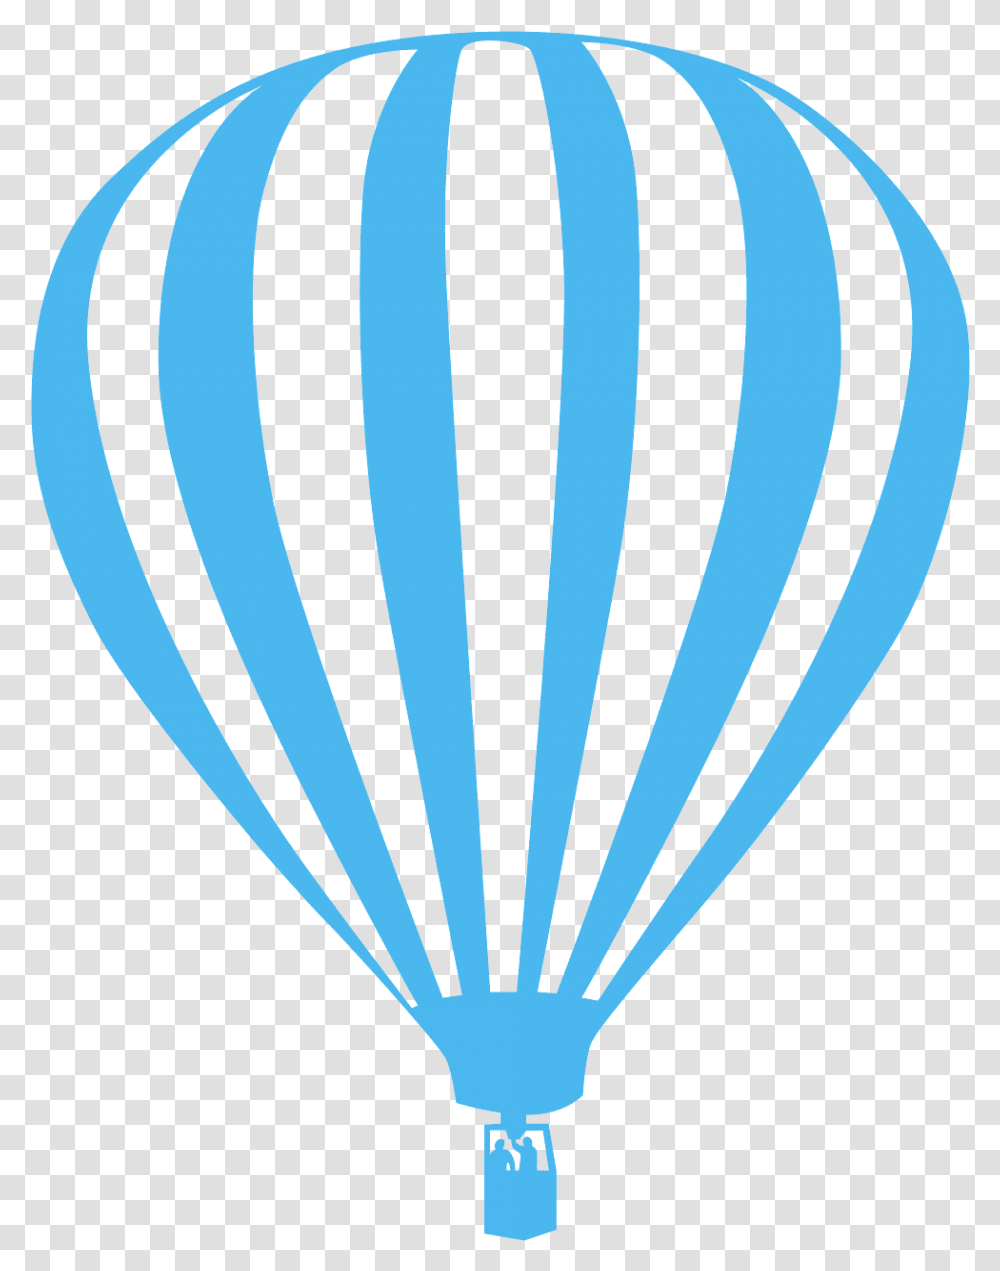 Tag Balo De Ar Quente, Hot Air Balloon, Aircraft, Vehicle, Transportation Transparent Png